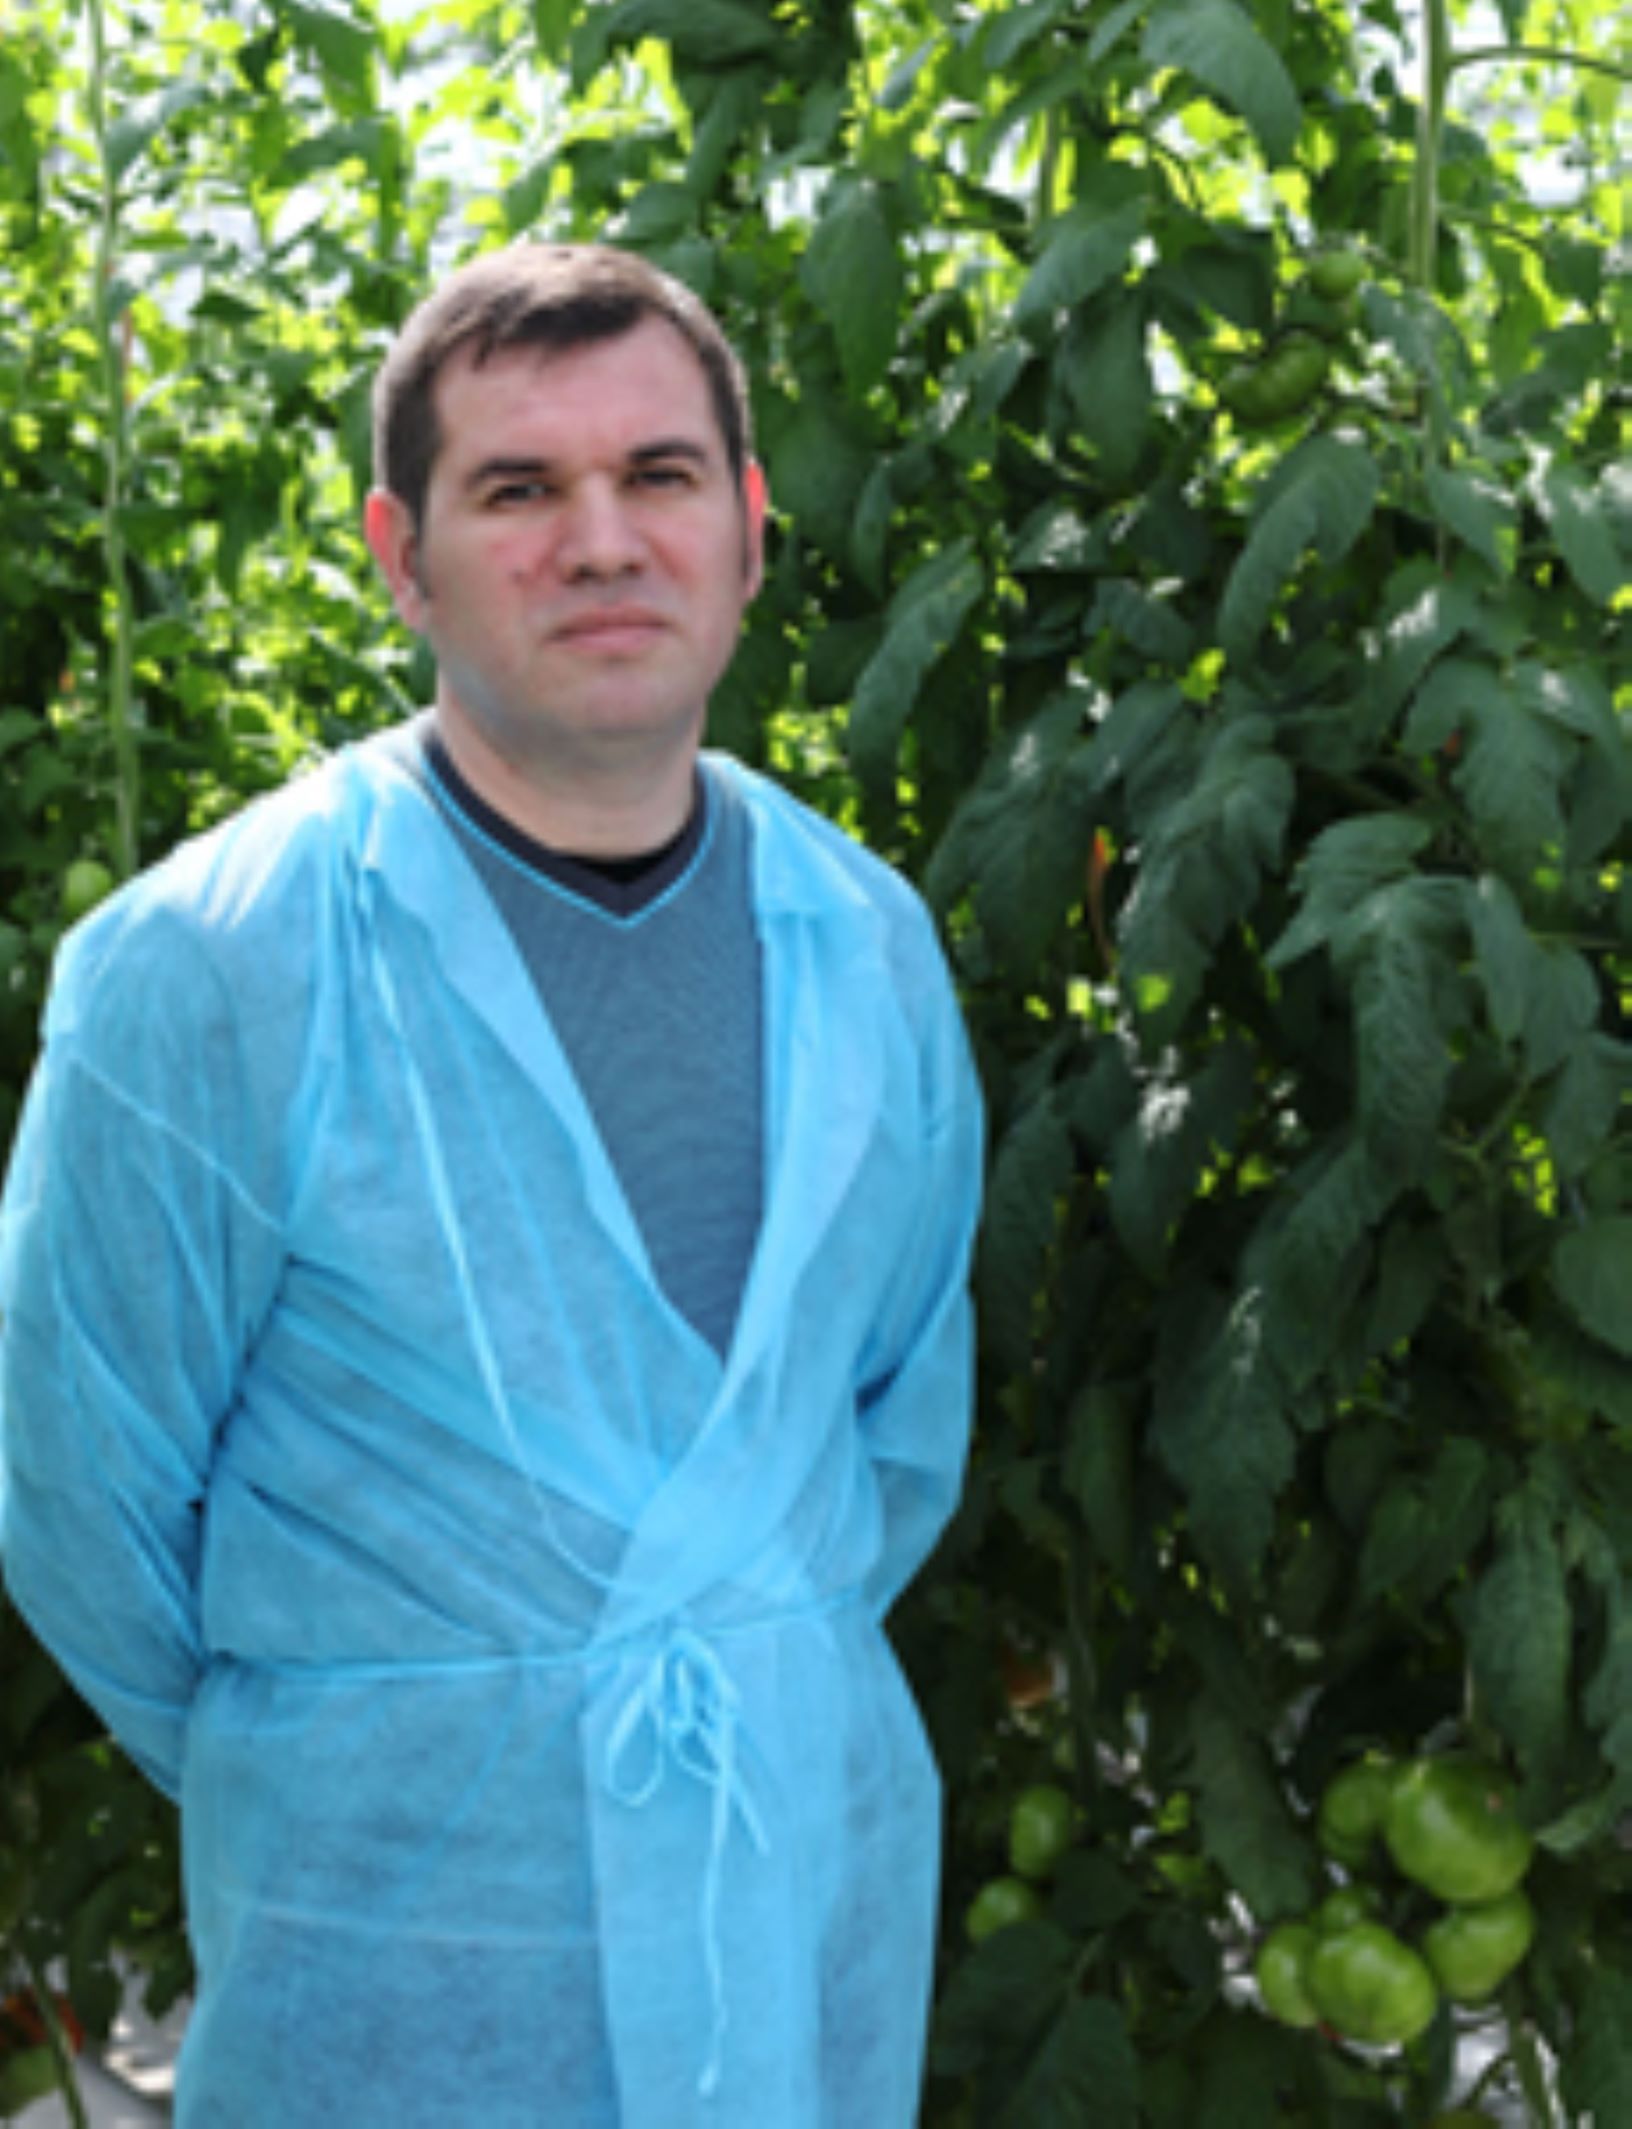 Mr. Bogatyrev in beside a crop of tomatoes.